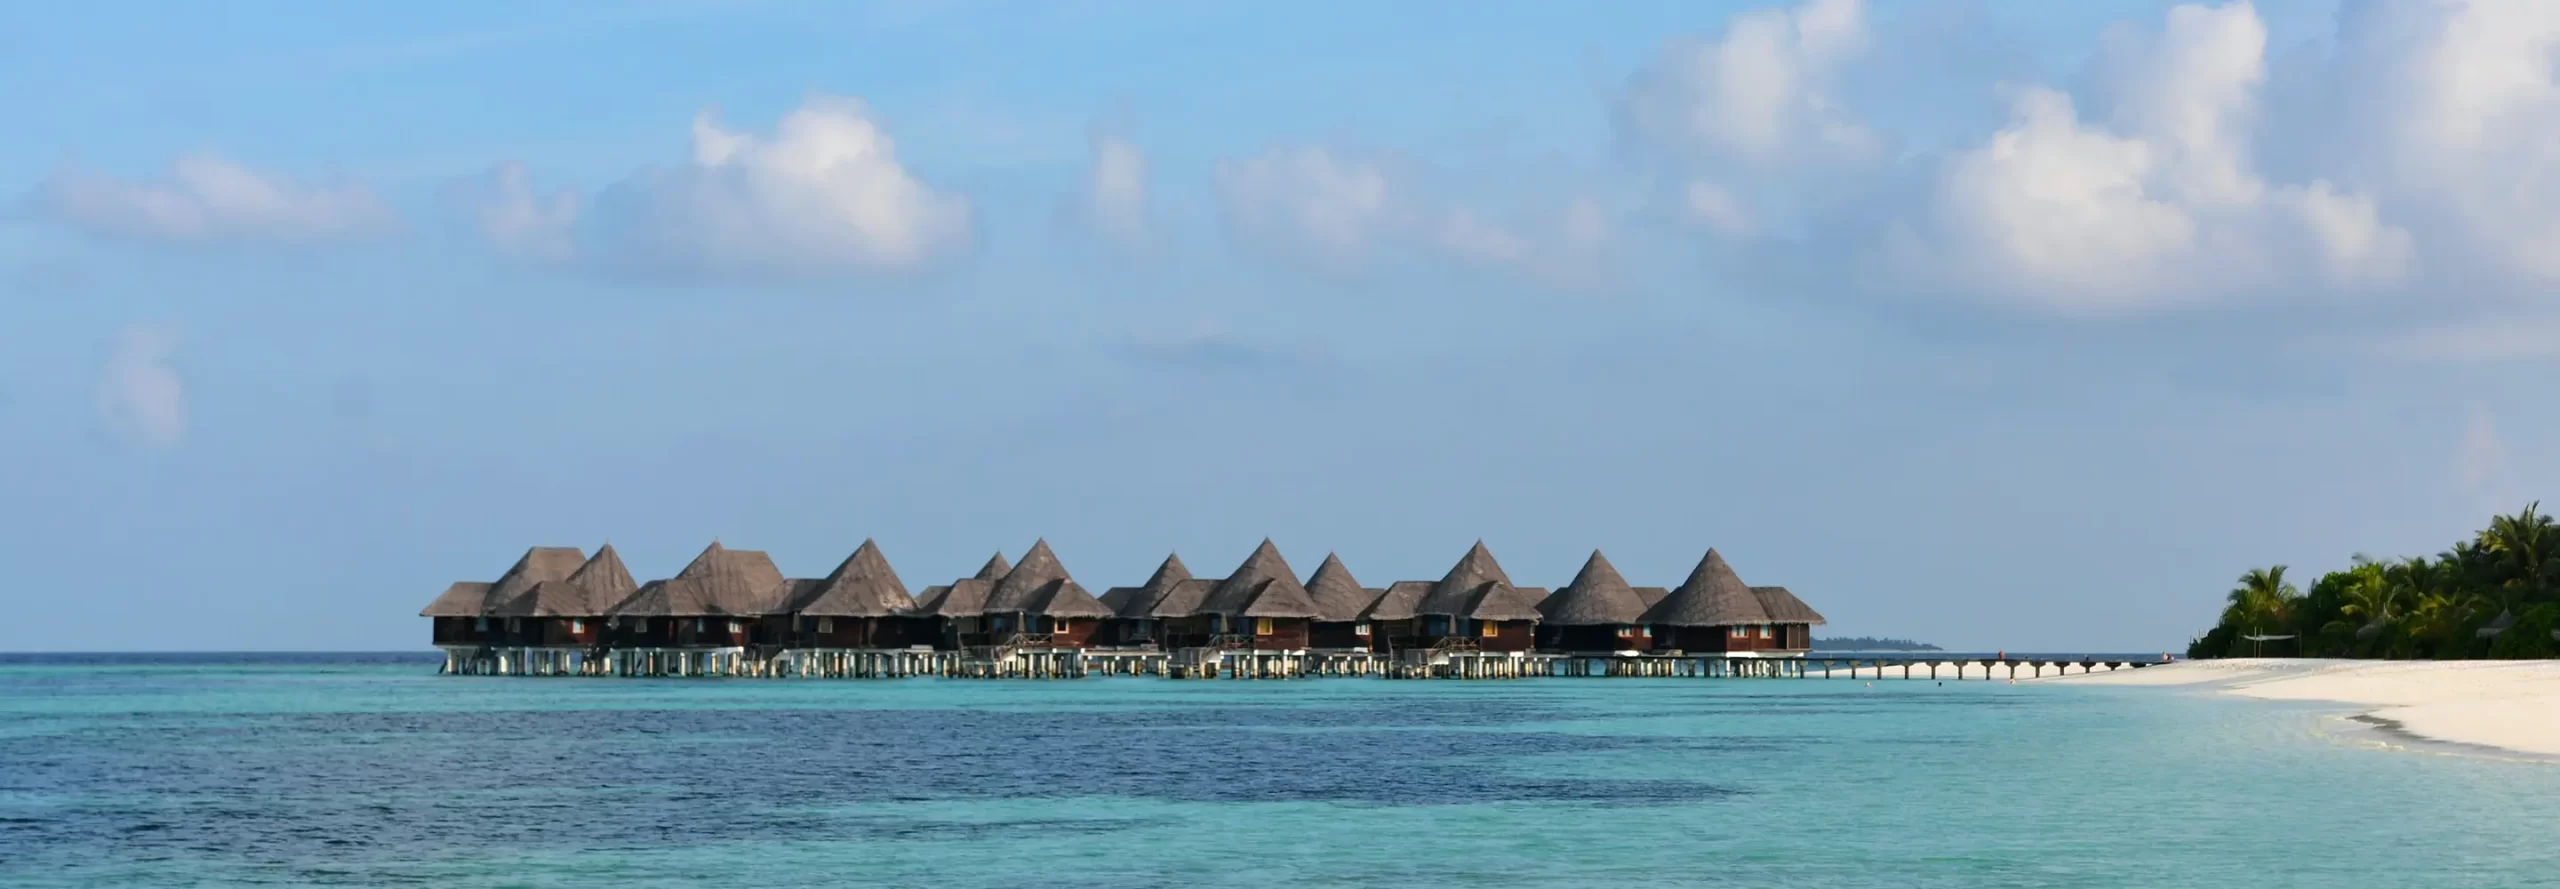 Huts in Ocean - FG Luxury Travel